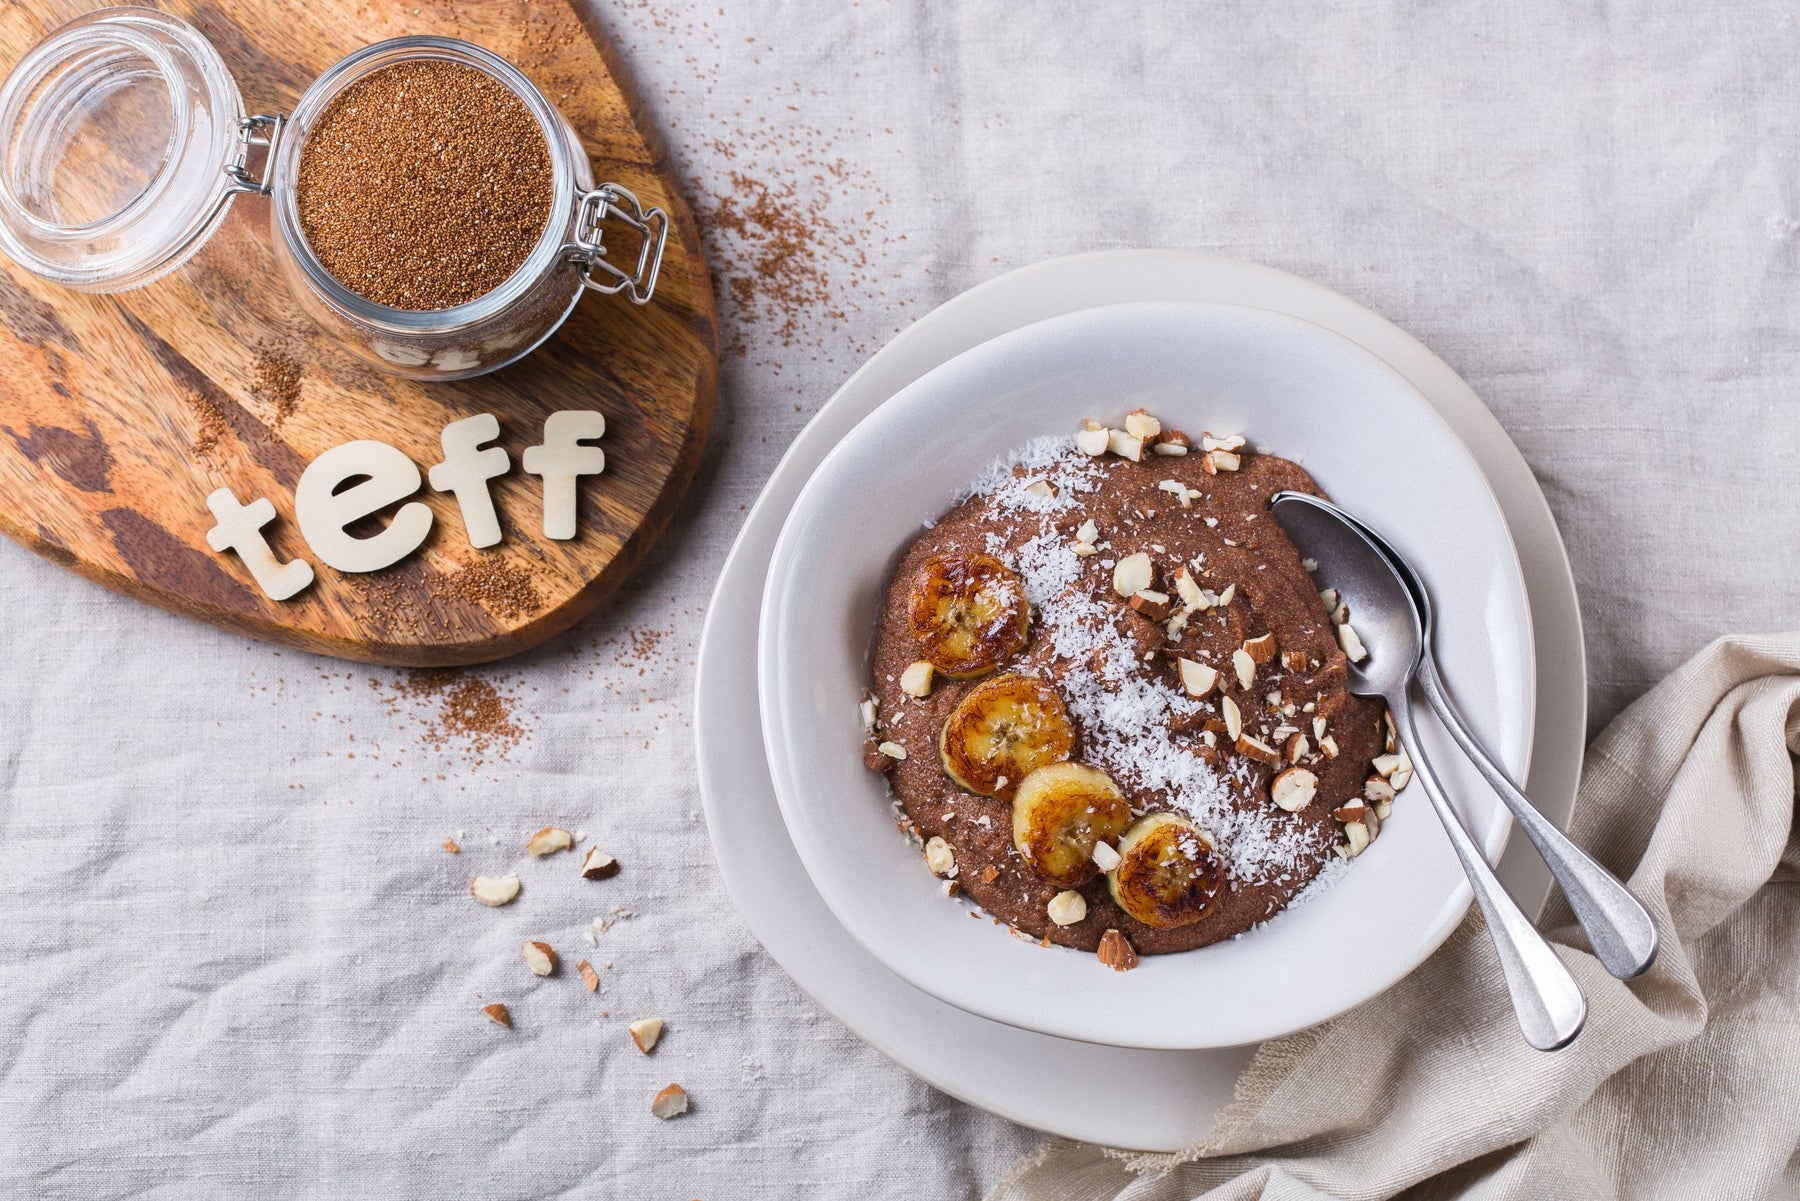 Organic Teff Grain Porridge: A Nourishing and Delicious Breakfast